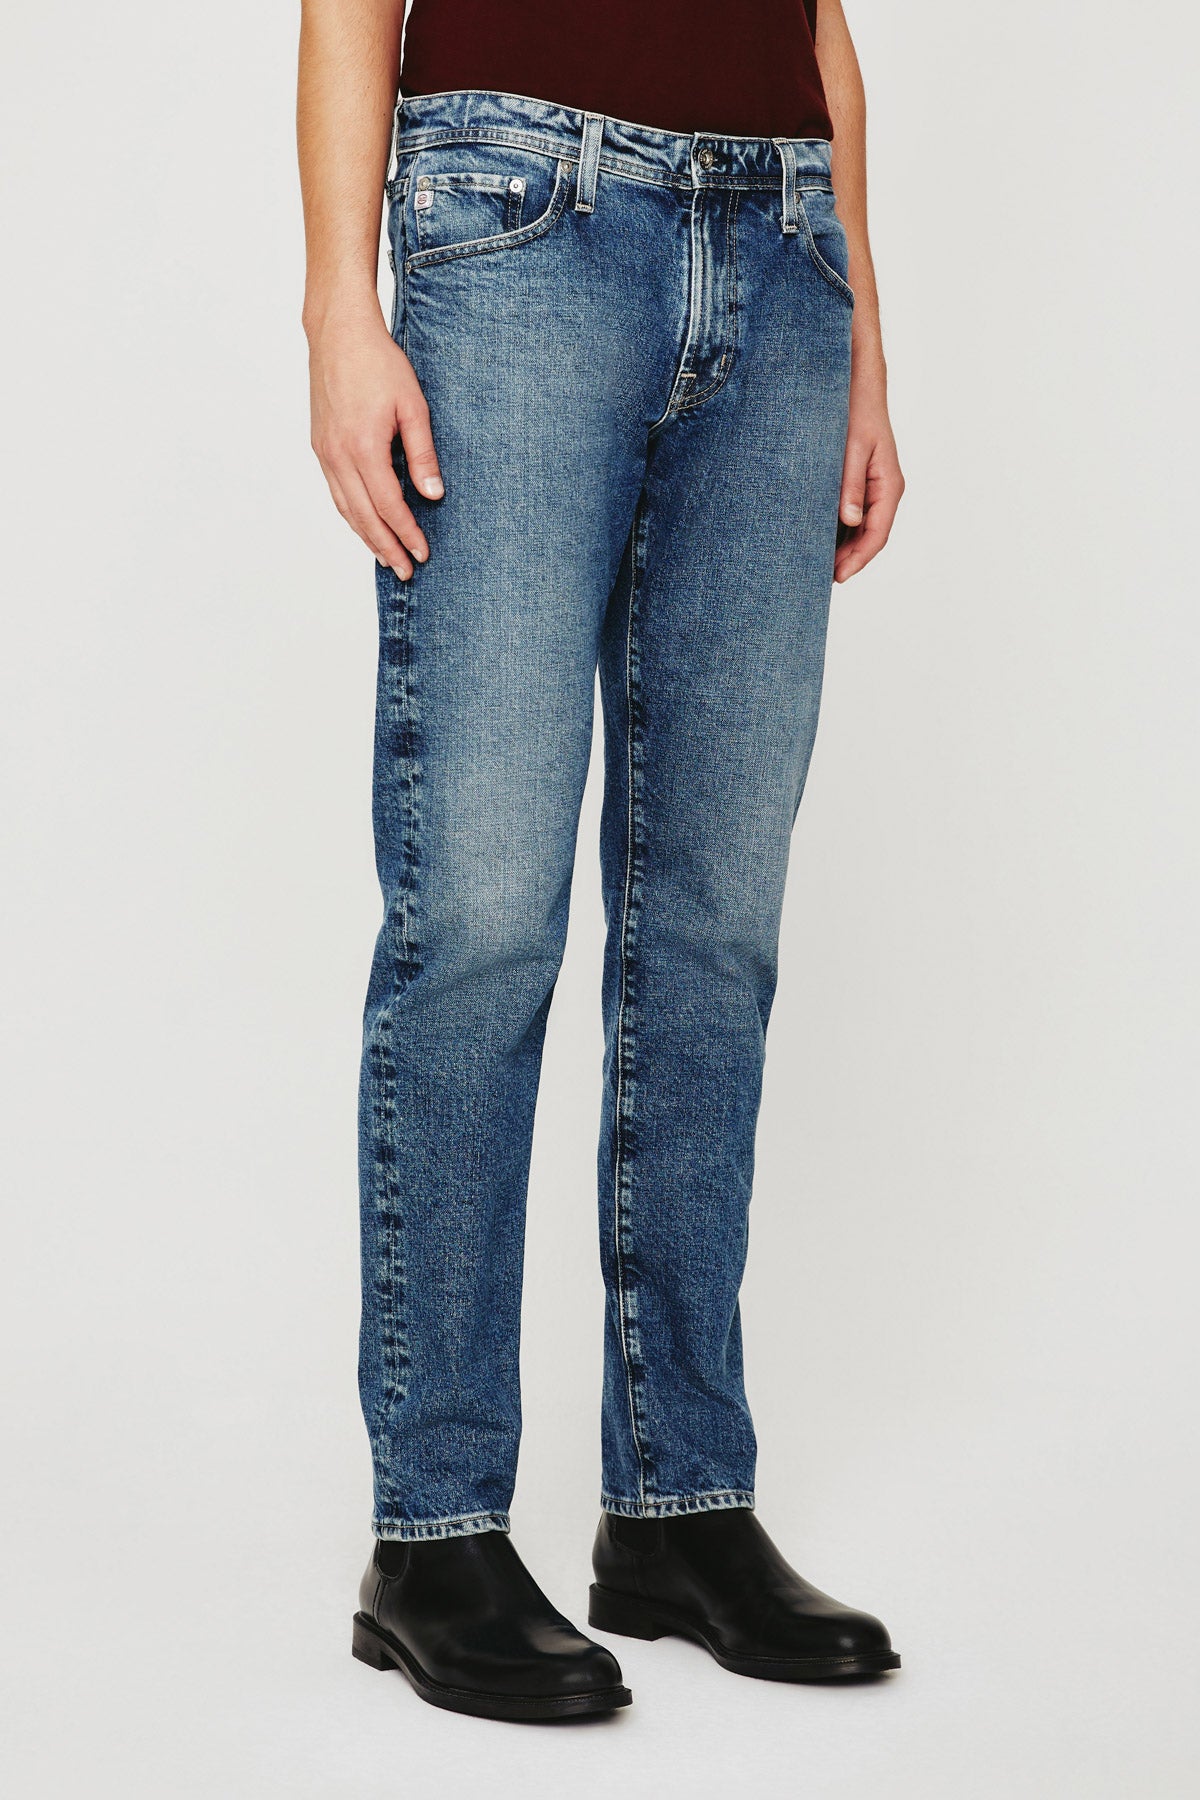 Level 99 Summer Janice Ultra Jeans - Skinny Jeans - Blue Jeggings - $106.00  - Lulus